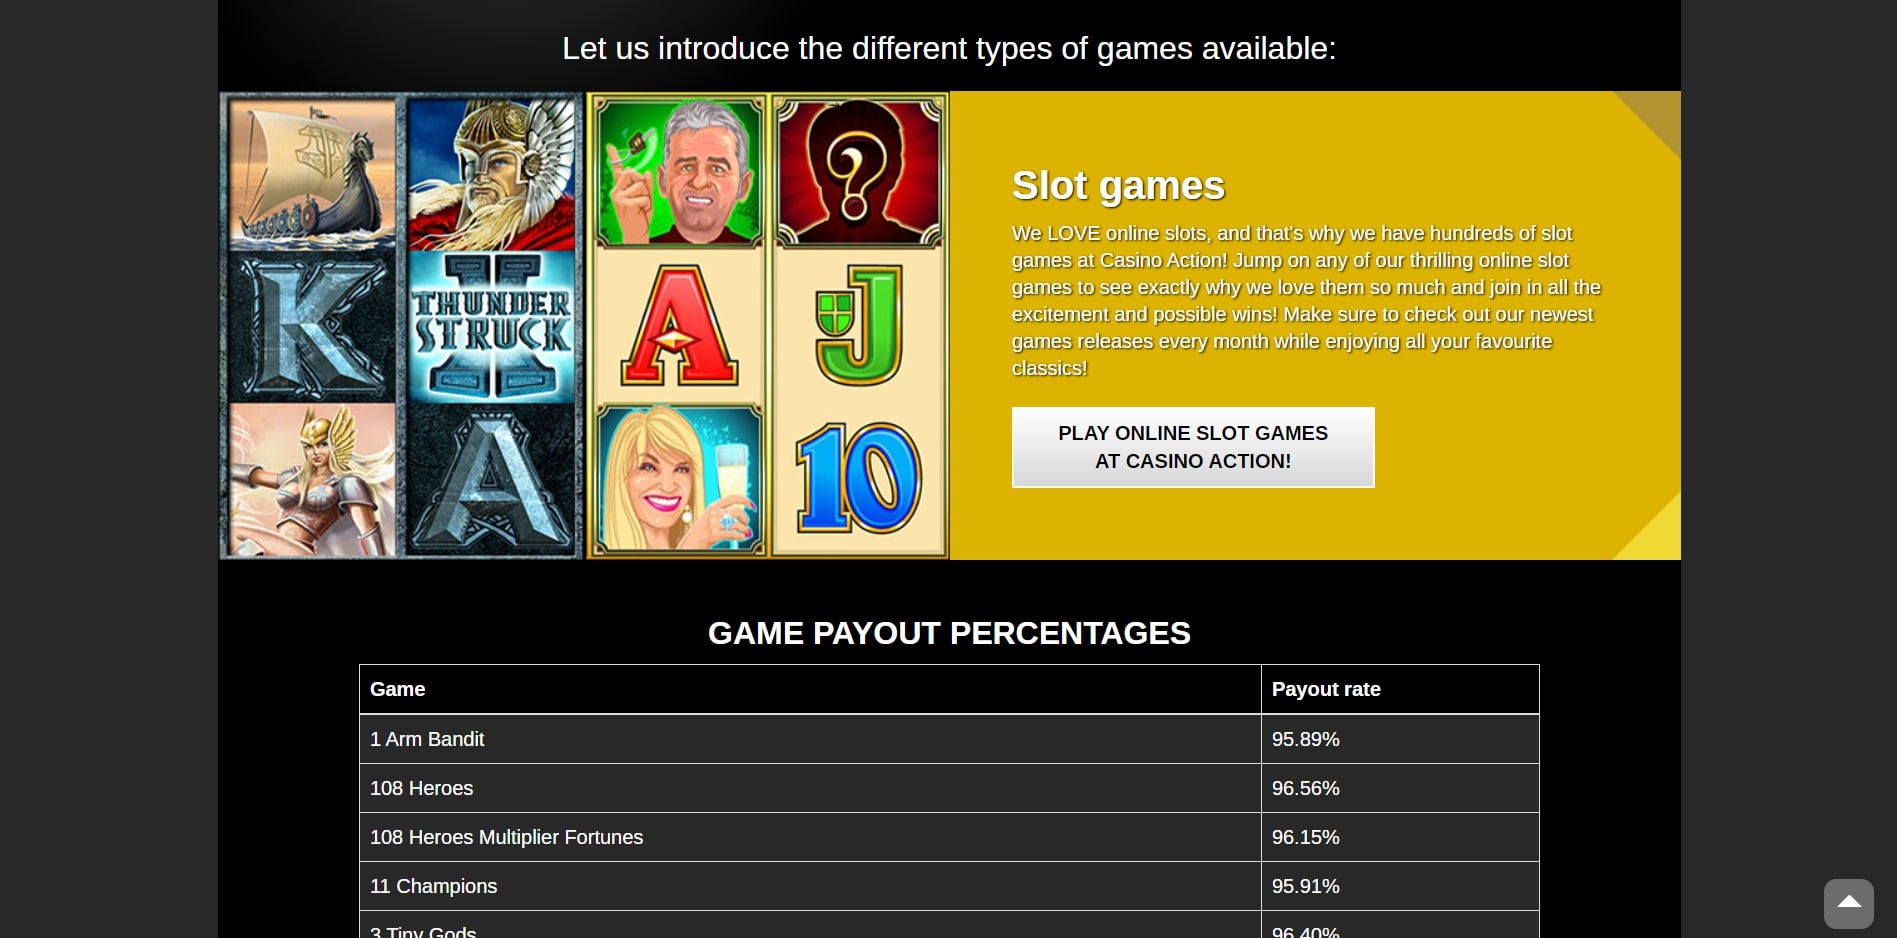 Casino Action UK Games